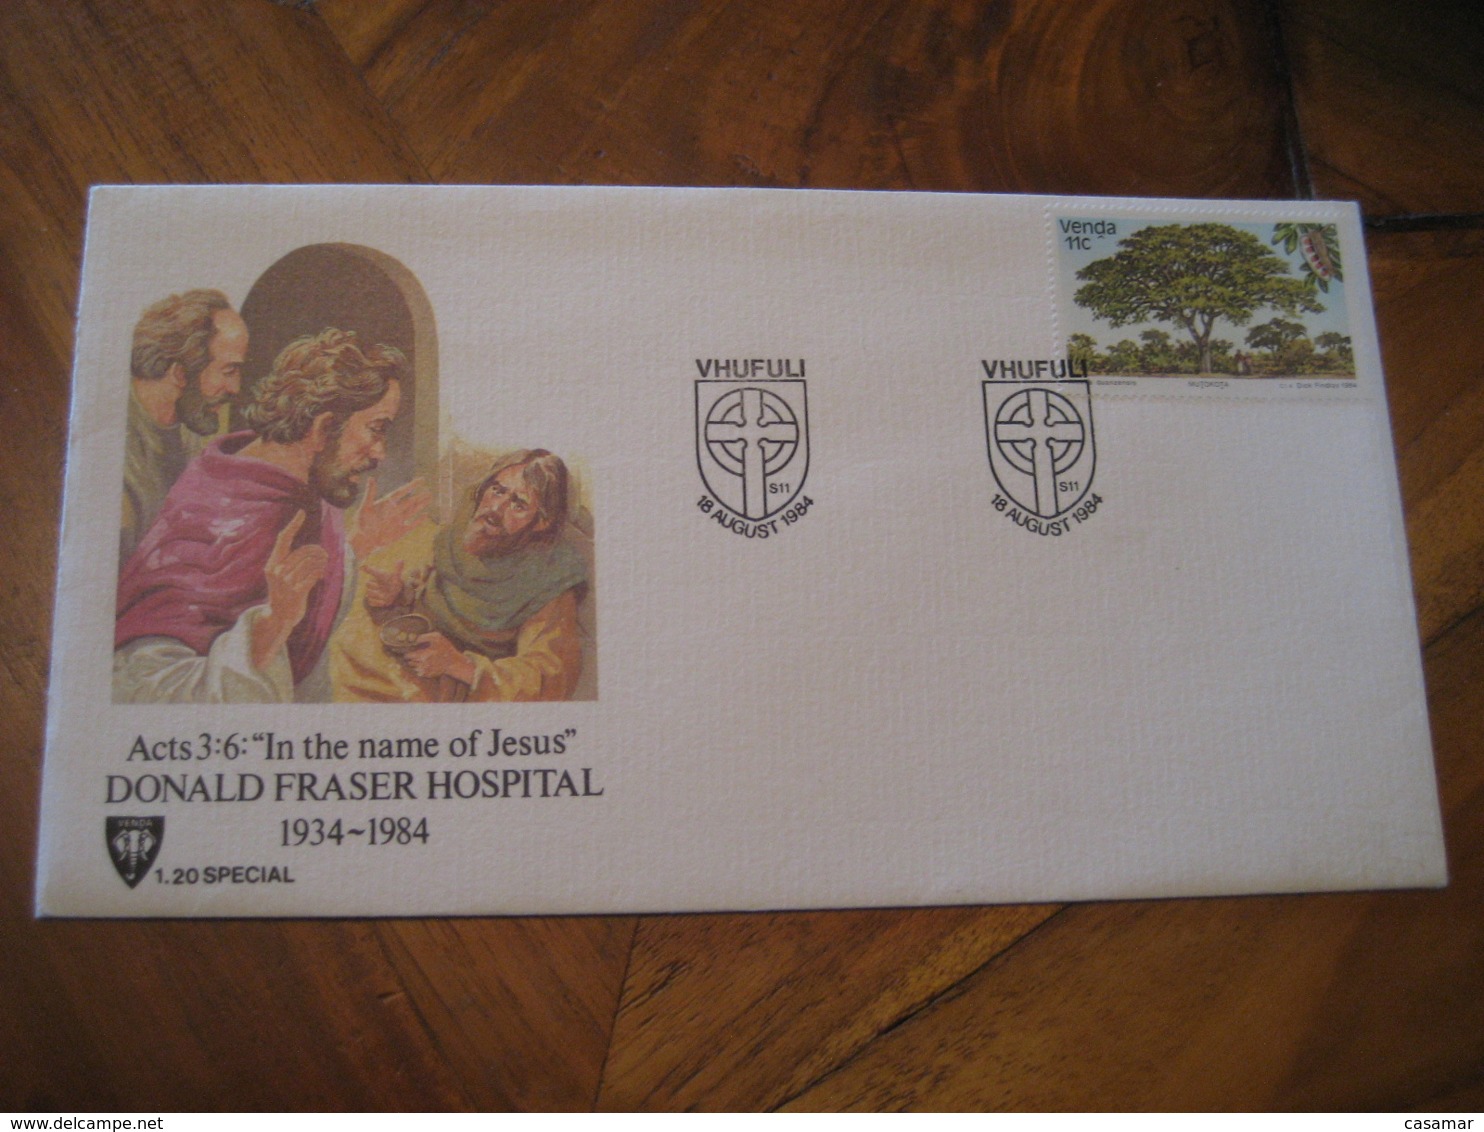 VHUFULI 1984 Donald Fraser Hospital Tree Stamp Cancel Cover VENDA South Africa Area - Venda